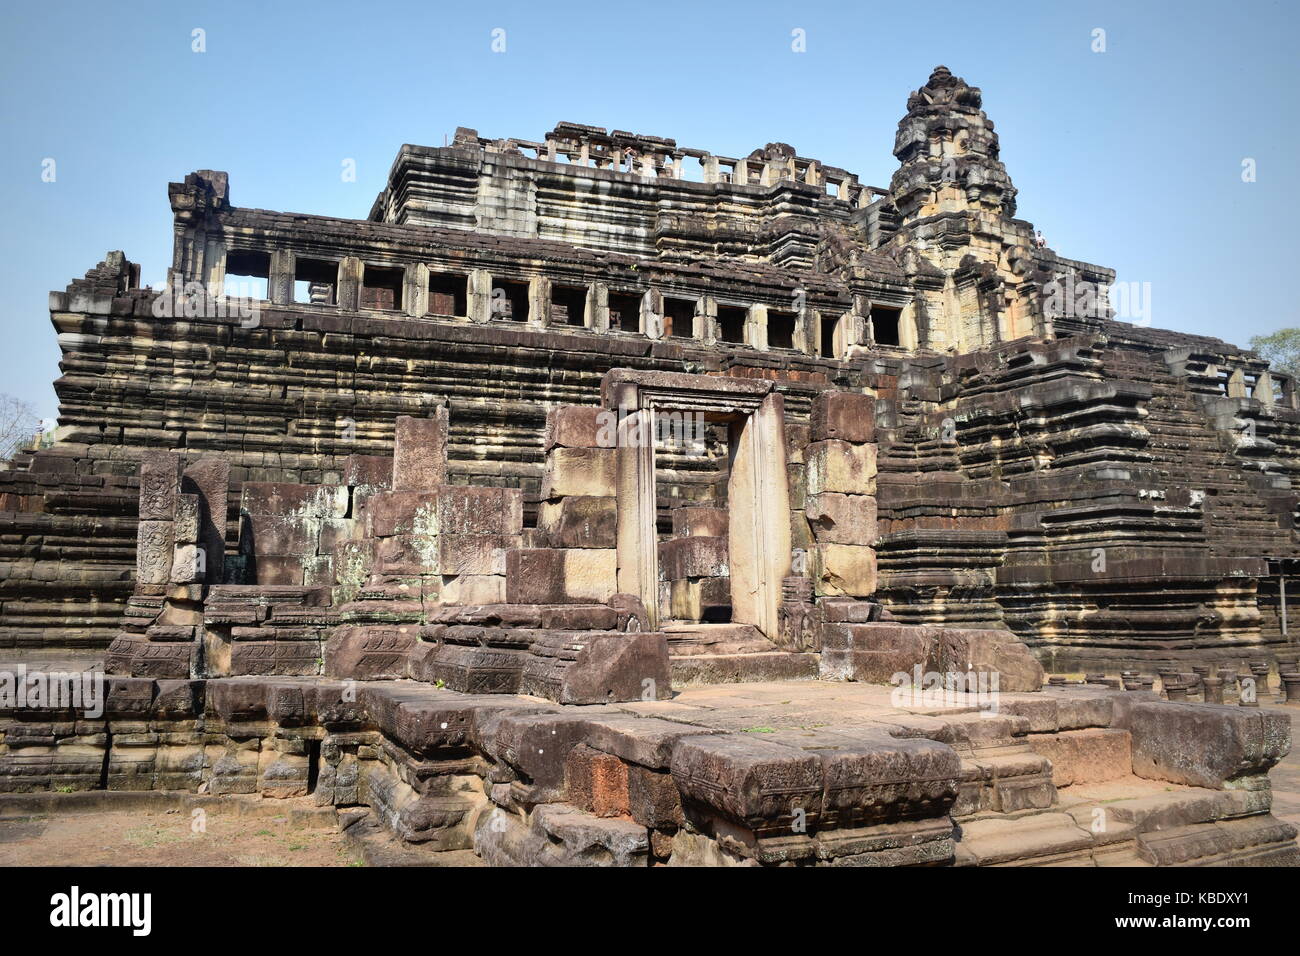 Ancient and impressive Khmer empire stone ruins of Baphuon mountain temple dedicated to Hindu god Shiva, Angkor Thom, Cambodia Stock Photo